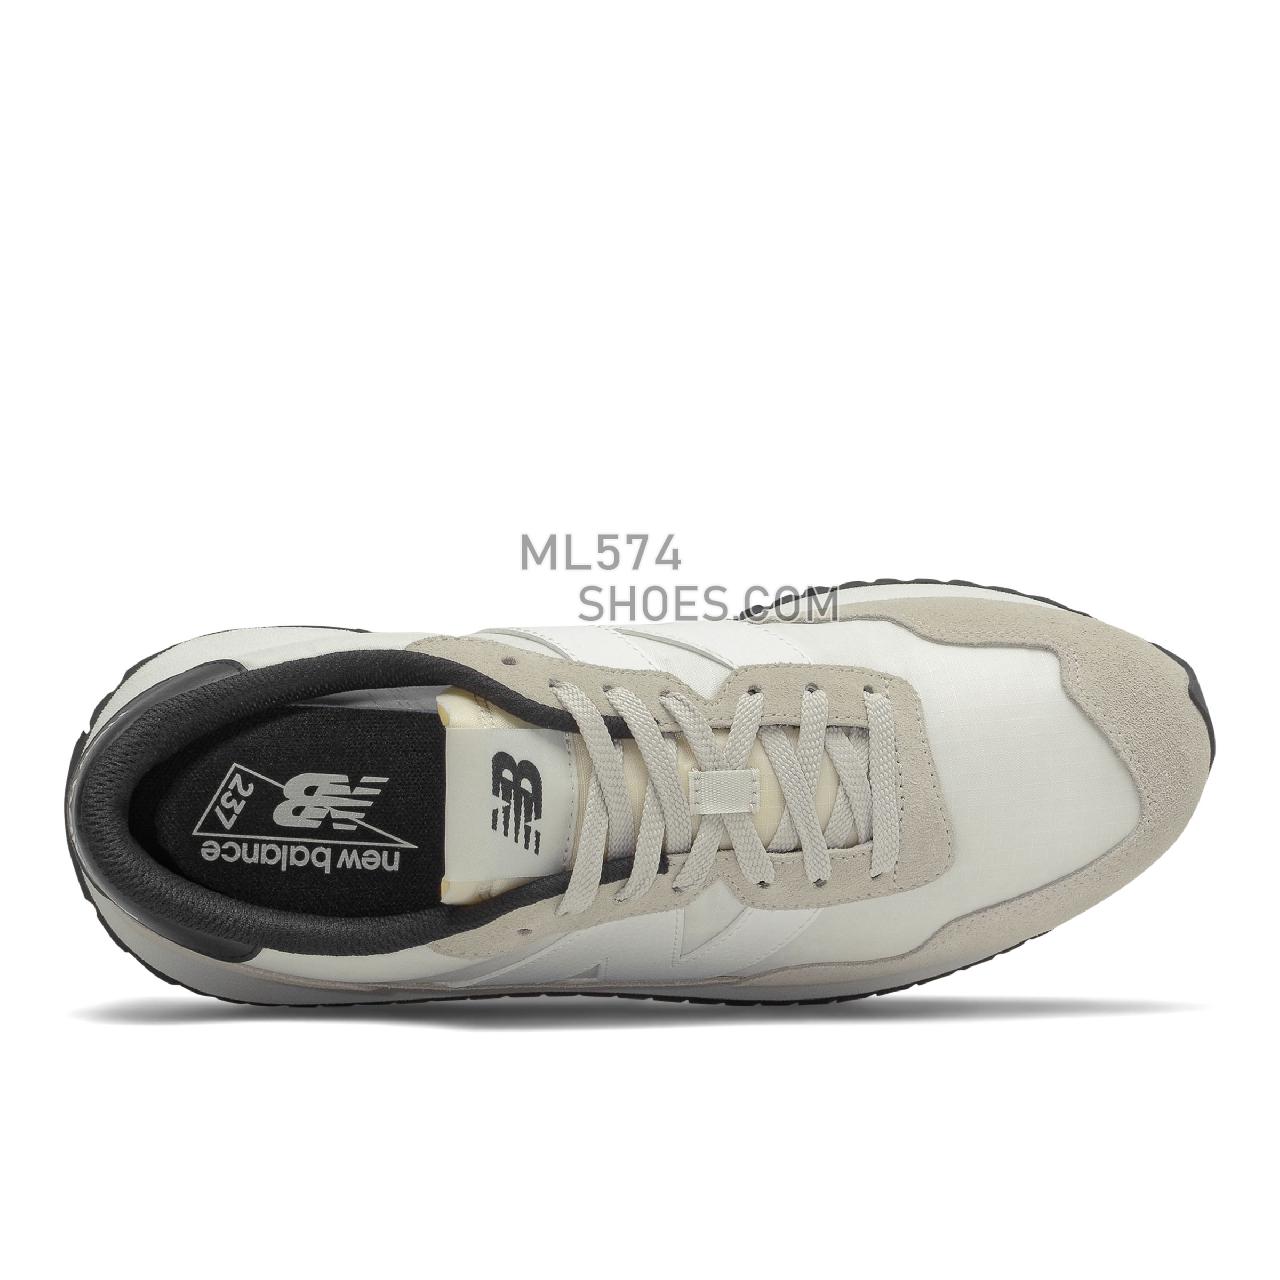 New Balance 237 - Men's Sport Style Sneakers - Timberwolf with Sea Salt - MS237UL1